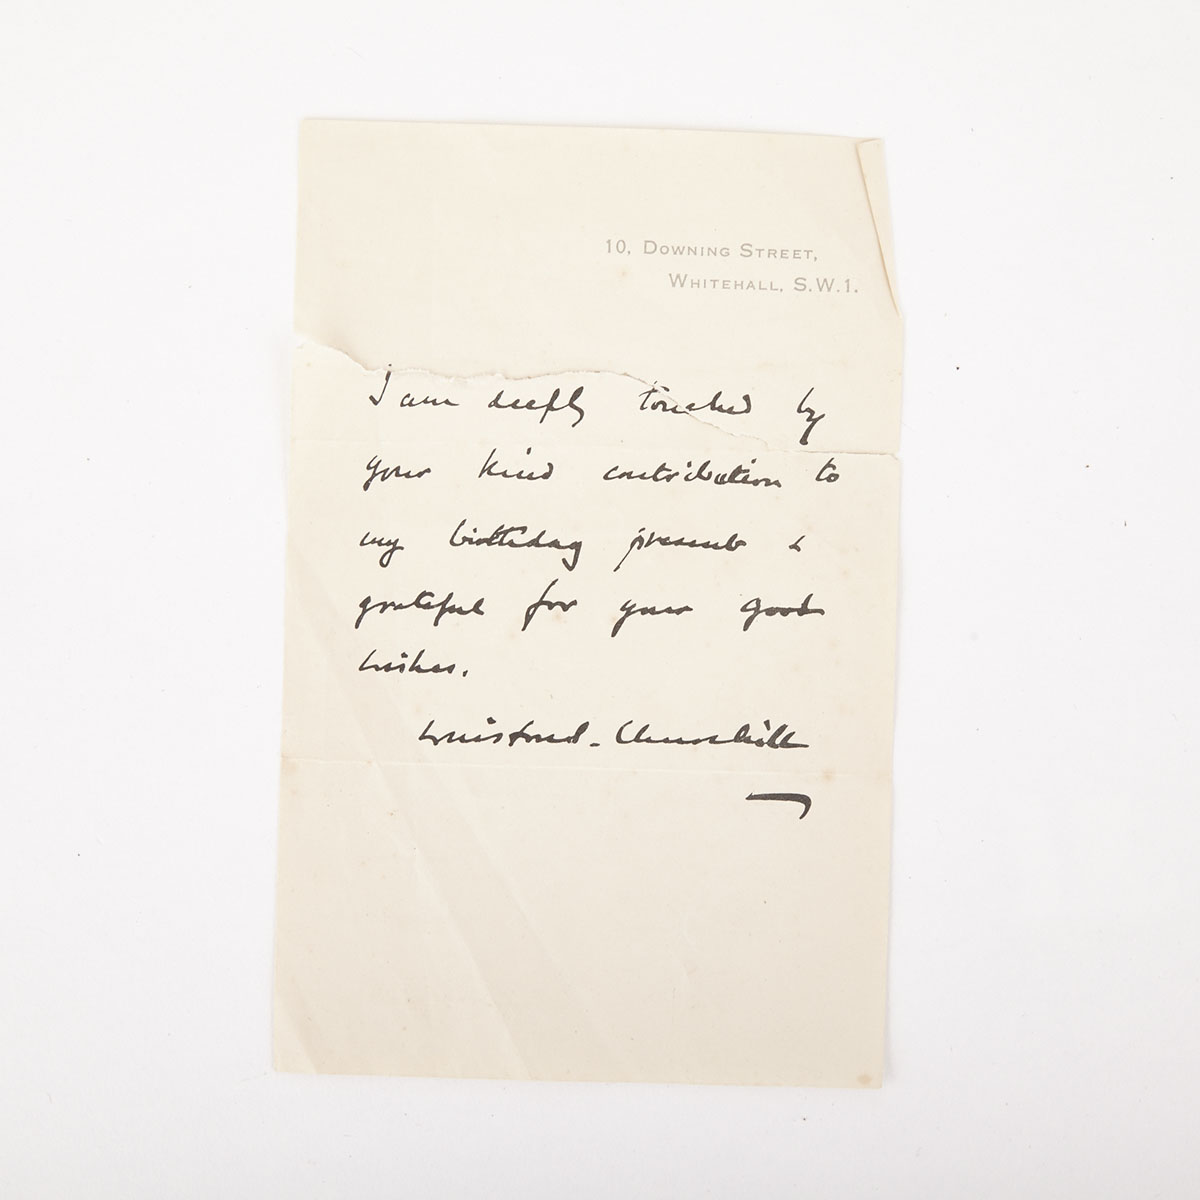 Winston Churchill facsimilie note, mid 20th century